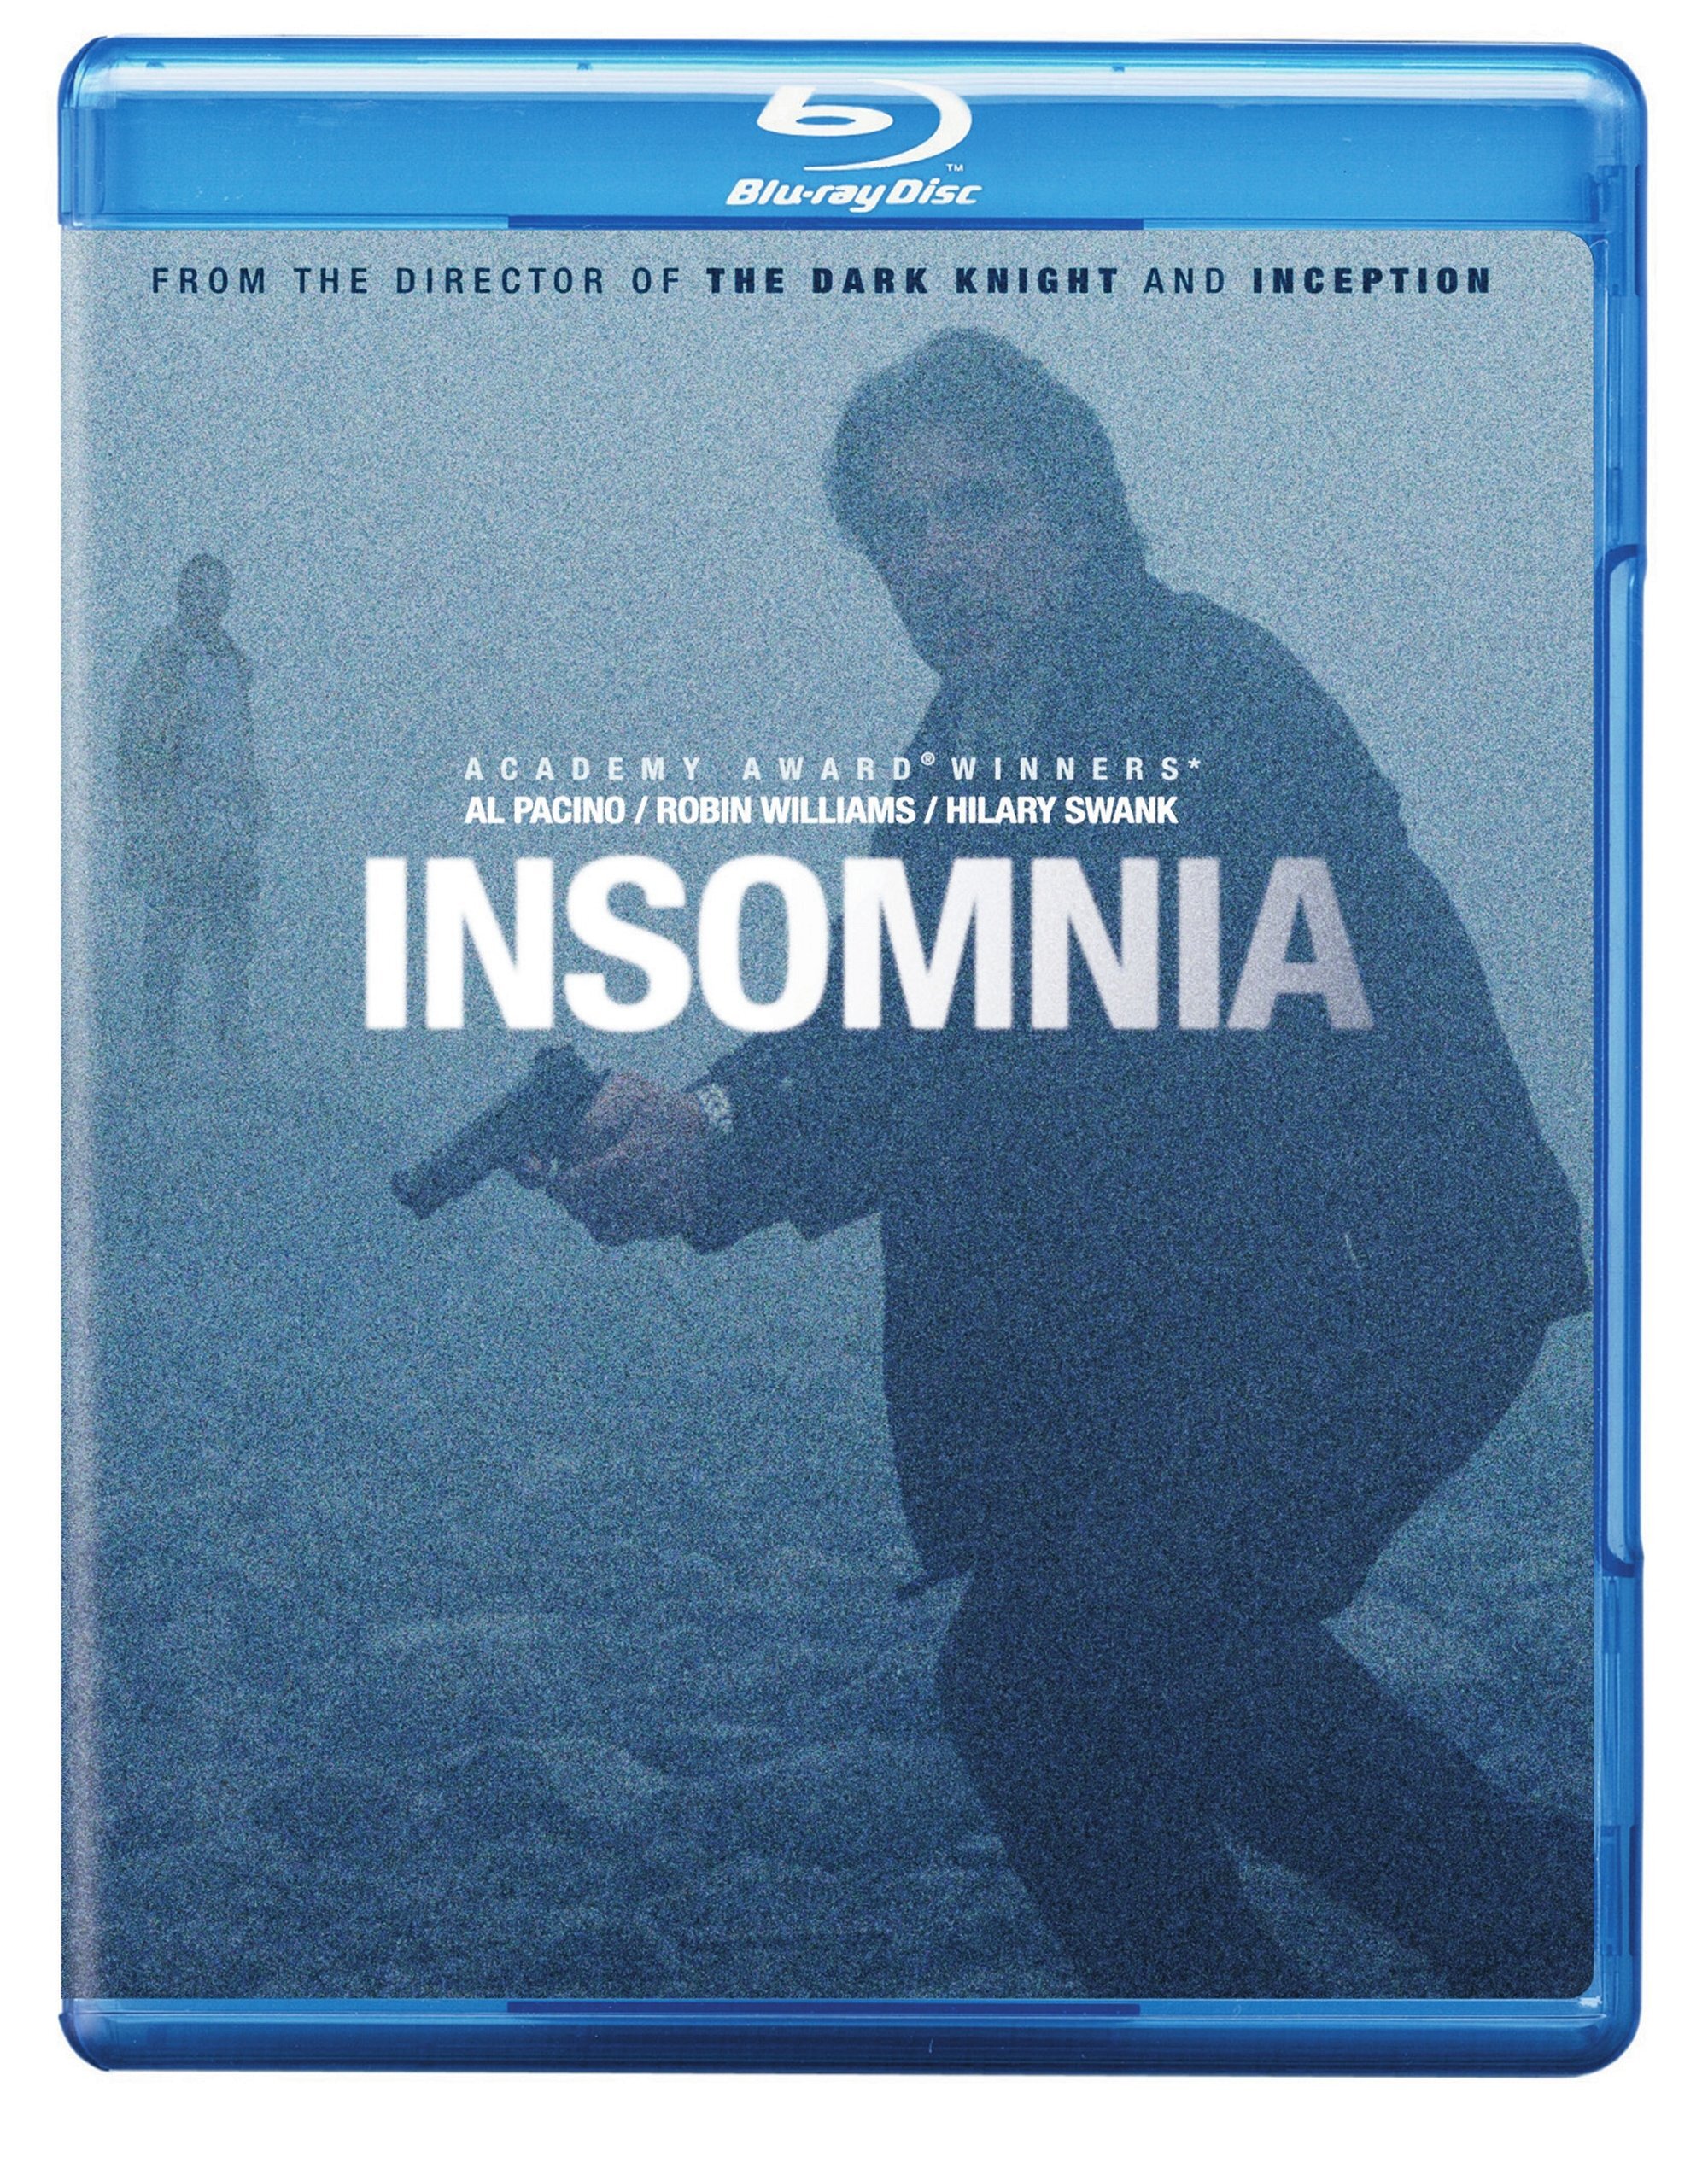 Insomnia (Blu-ray + Movie Cash) - Blu-ray [ 2002 ]  - Thriller Movies On Blu-ray - Movies On GRUV